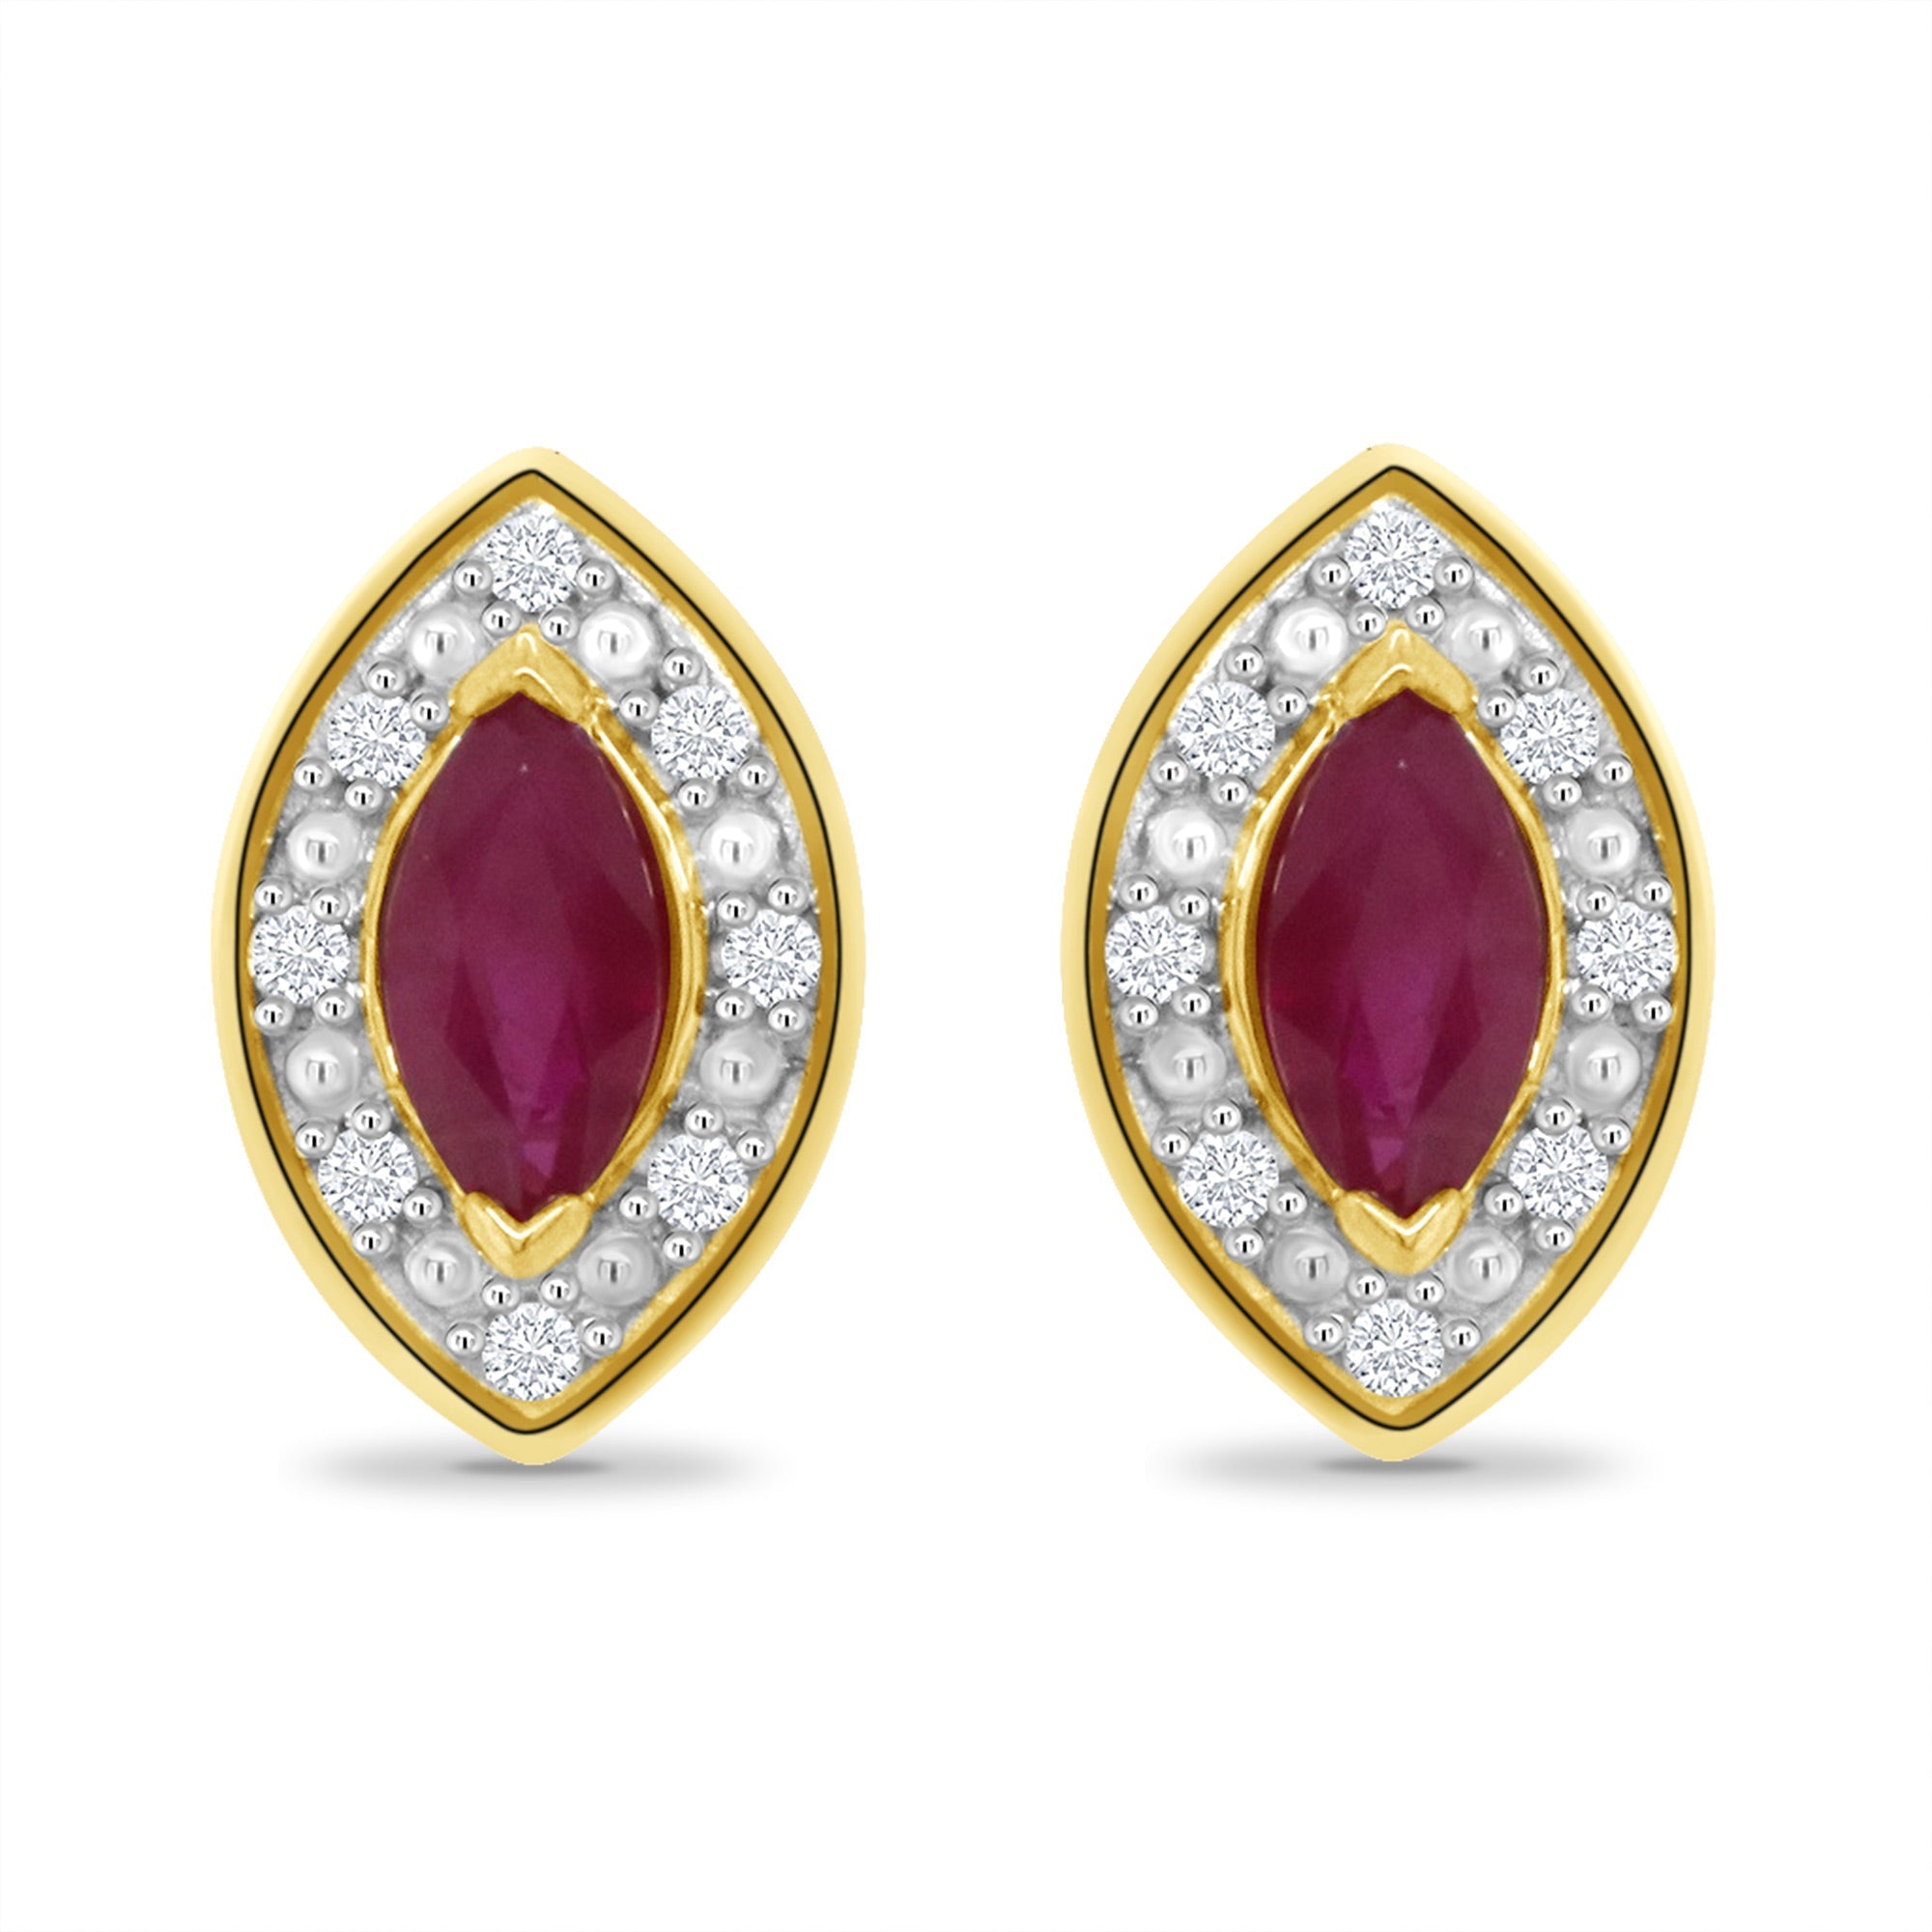 9ct gold 5x3mm marquise shape ruby & diamond stud earrings 0.05ct